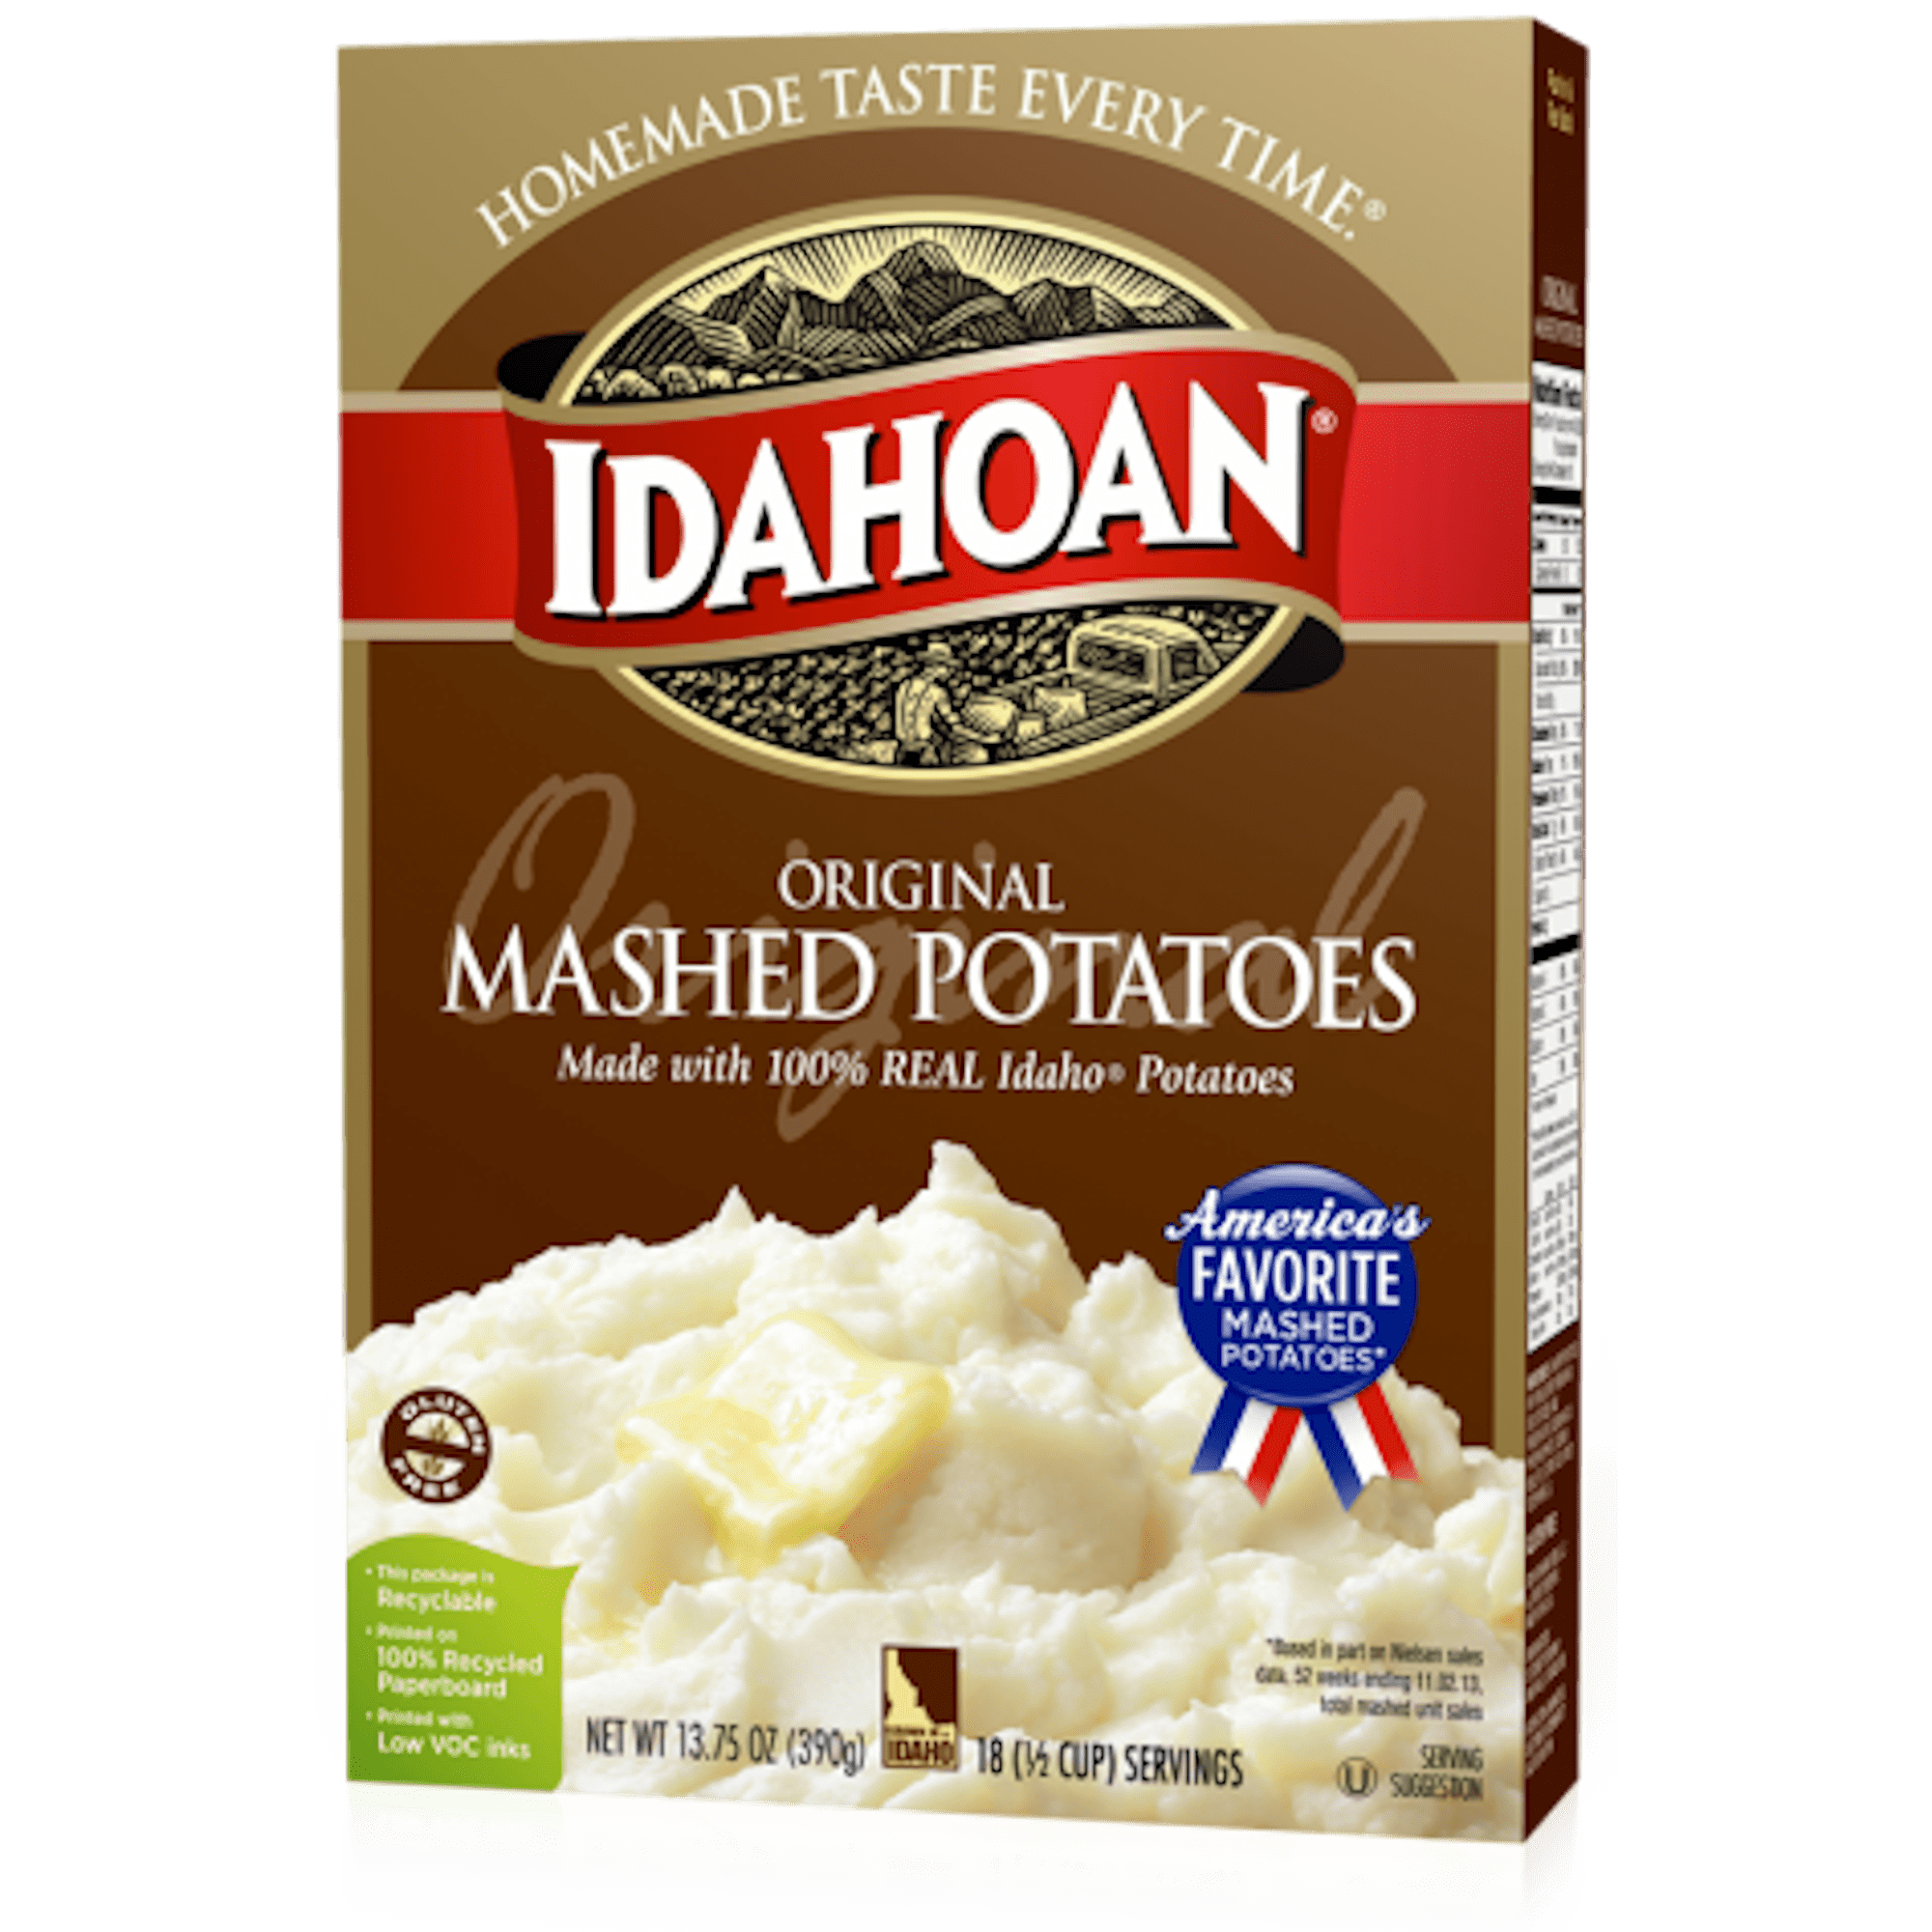 Idahoan Original Mashed Potatoes - 13.75 oz box